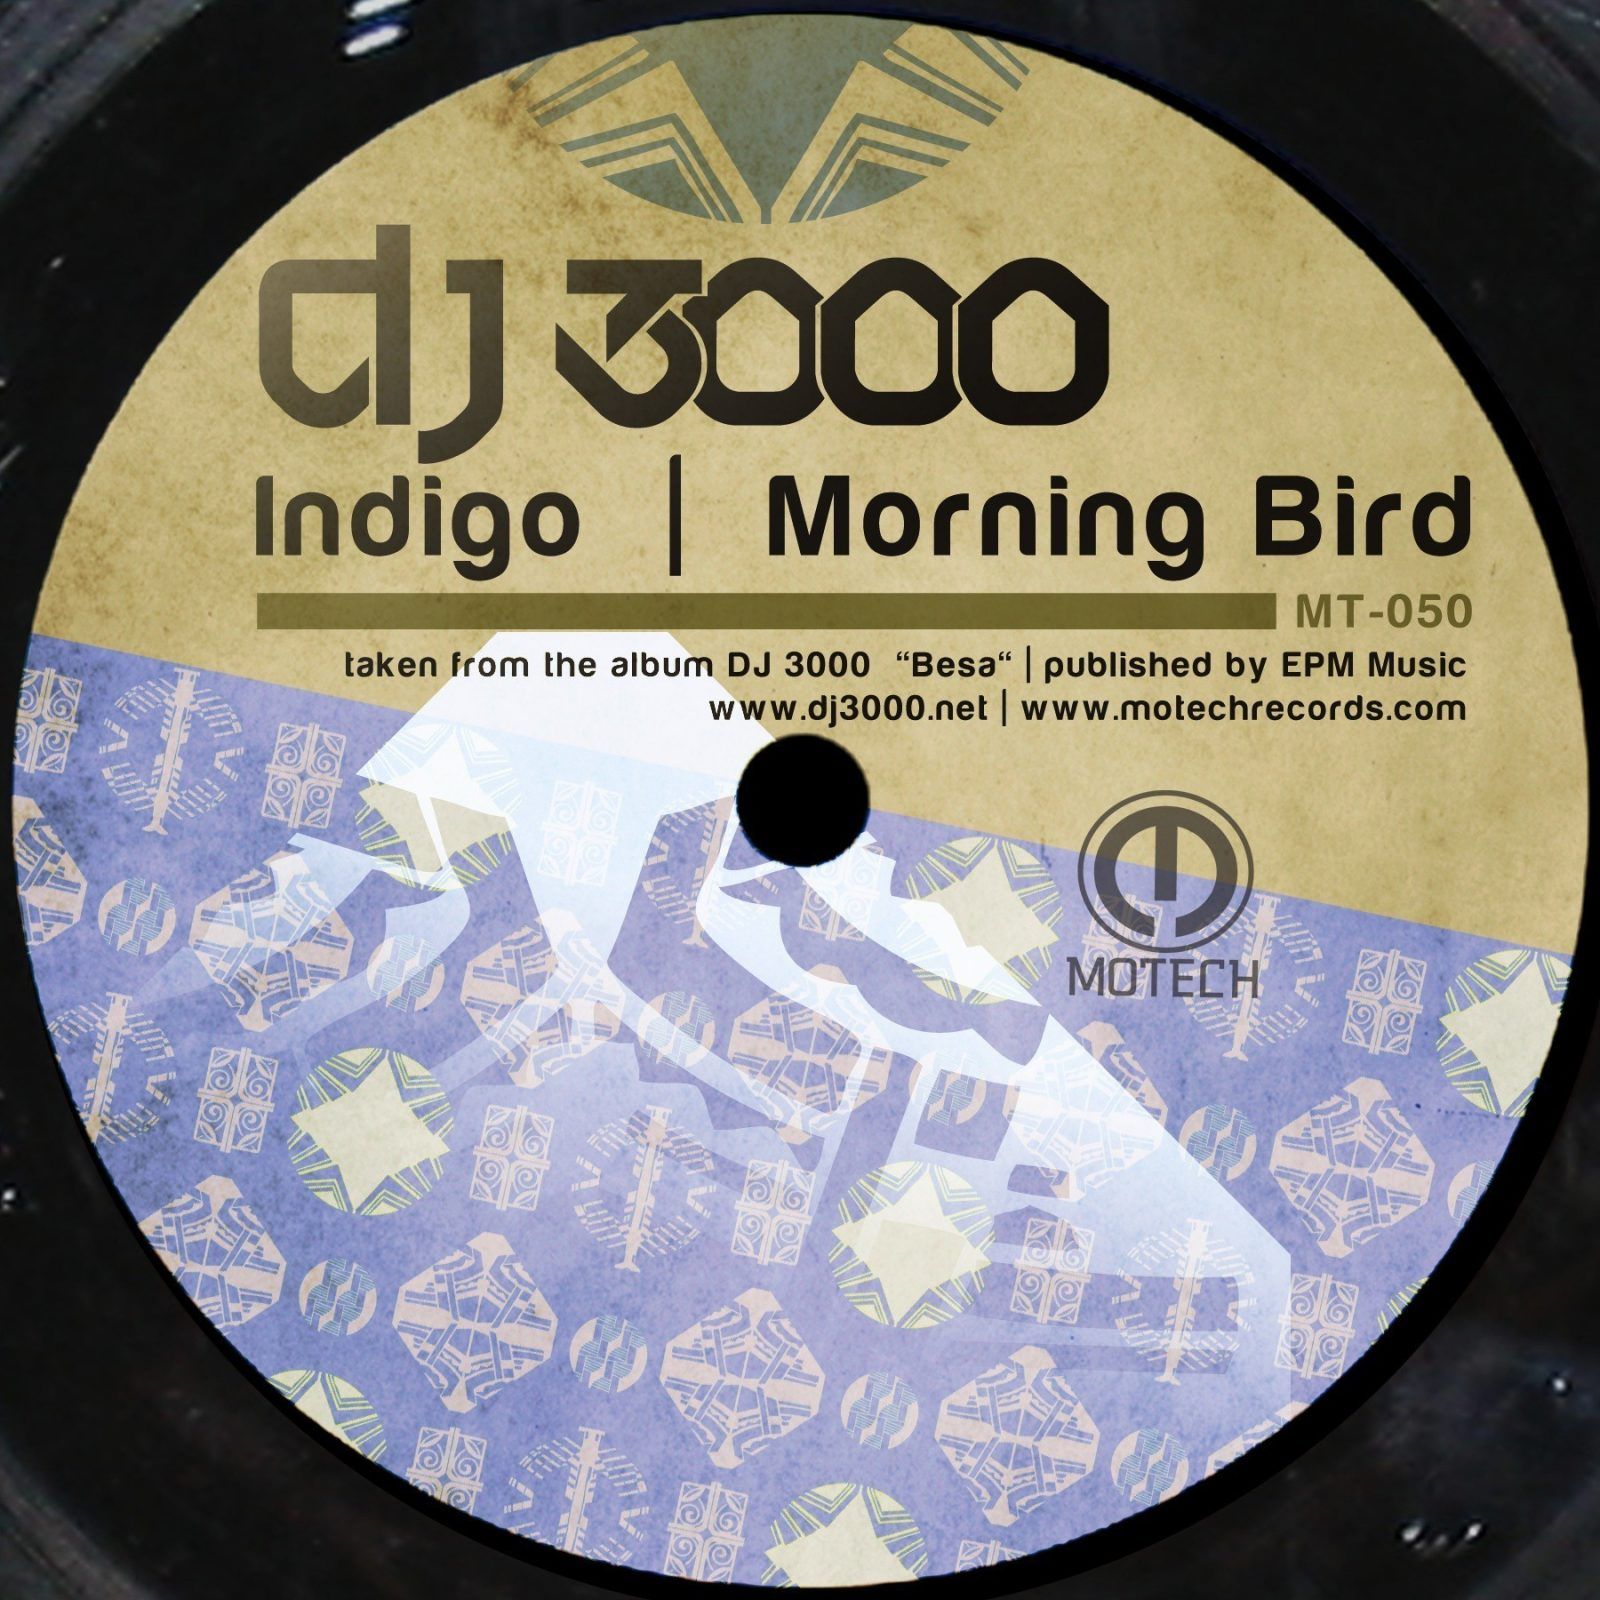 IhouseU.com | DJ 3000 – Indigo / Morning Bird